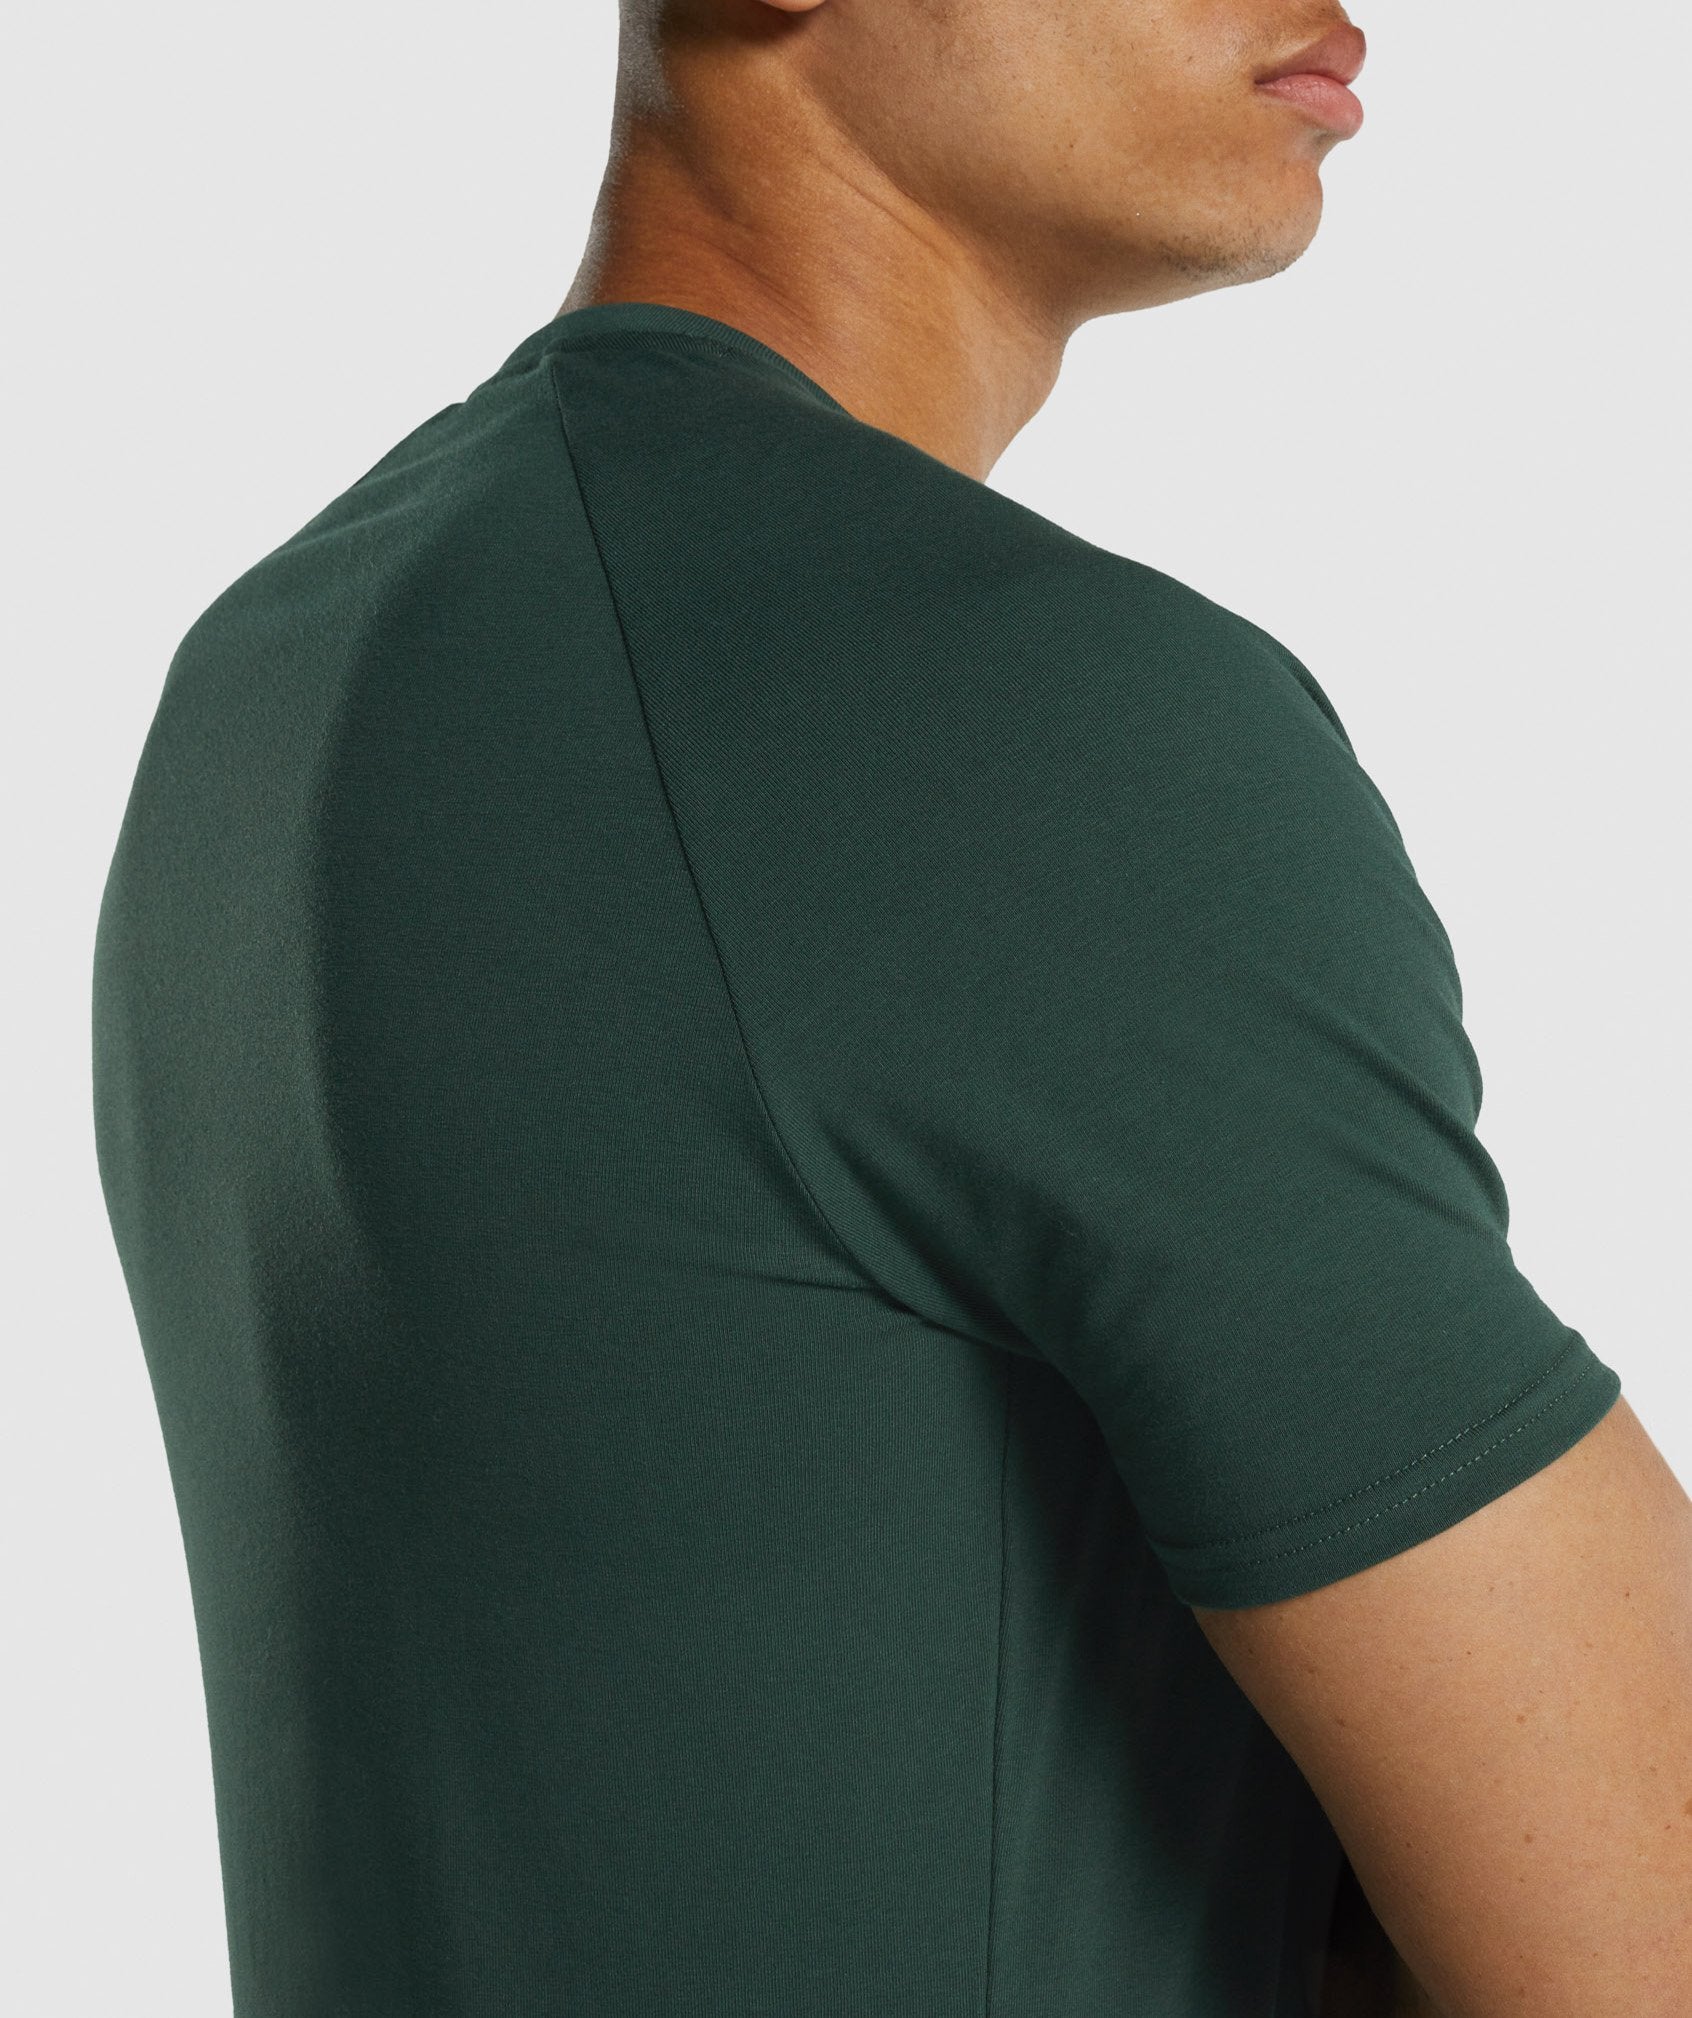 Apollo T-Shirt in Dark Green - view 6